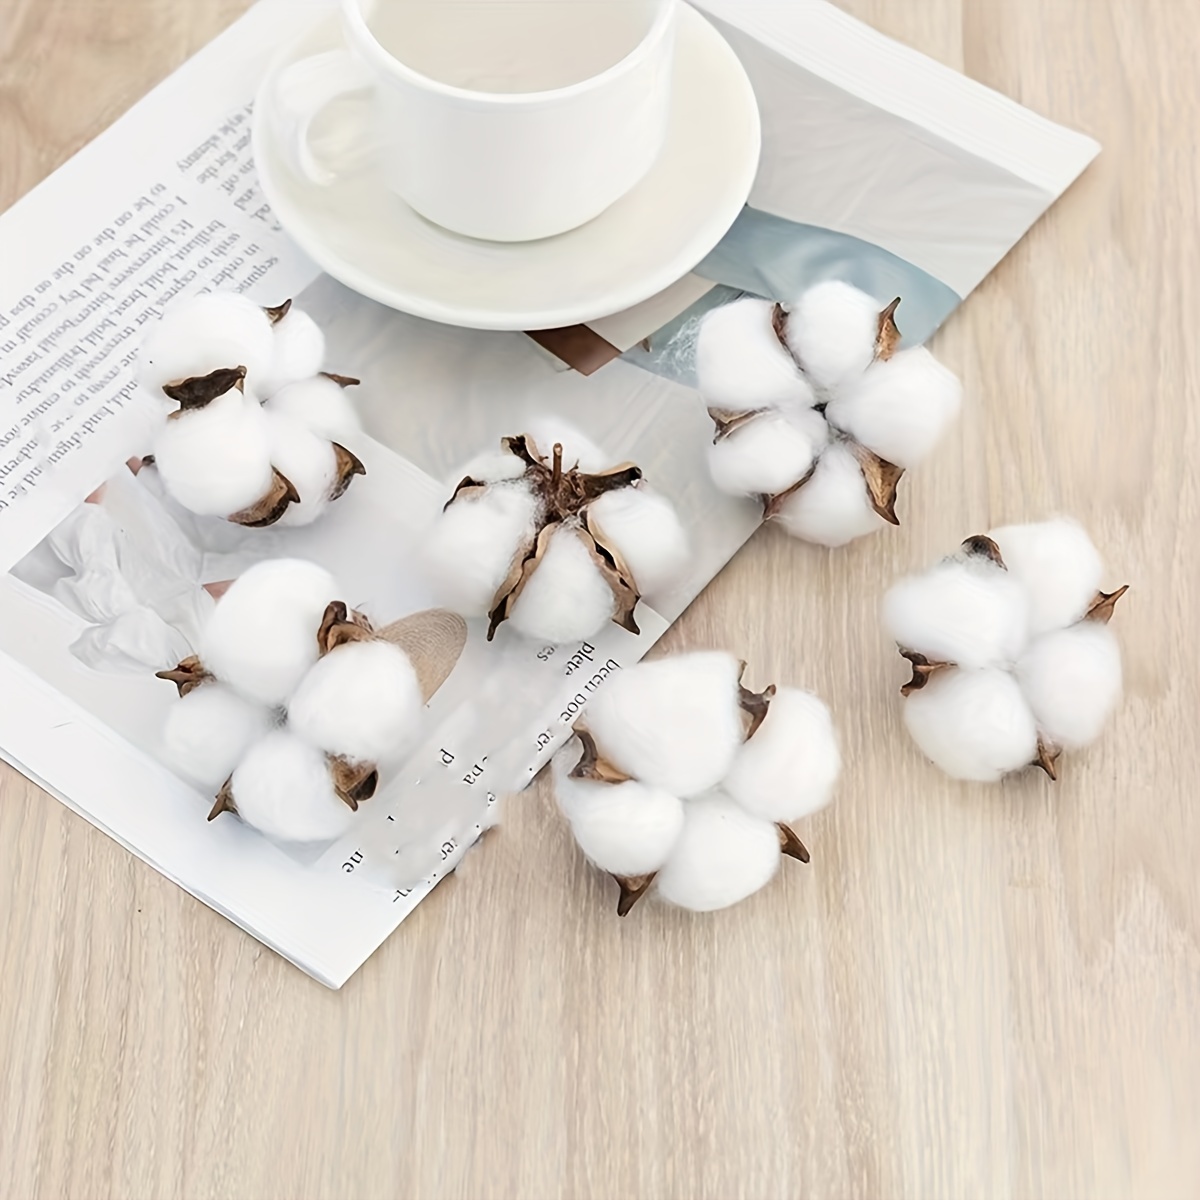 Cotton Bolls (Natural Cotton Balls)